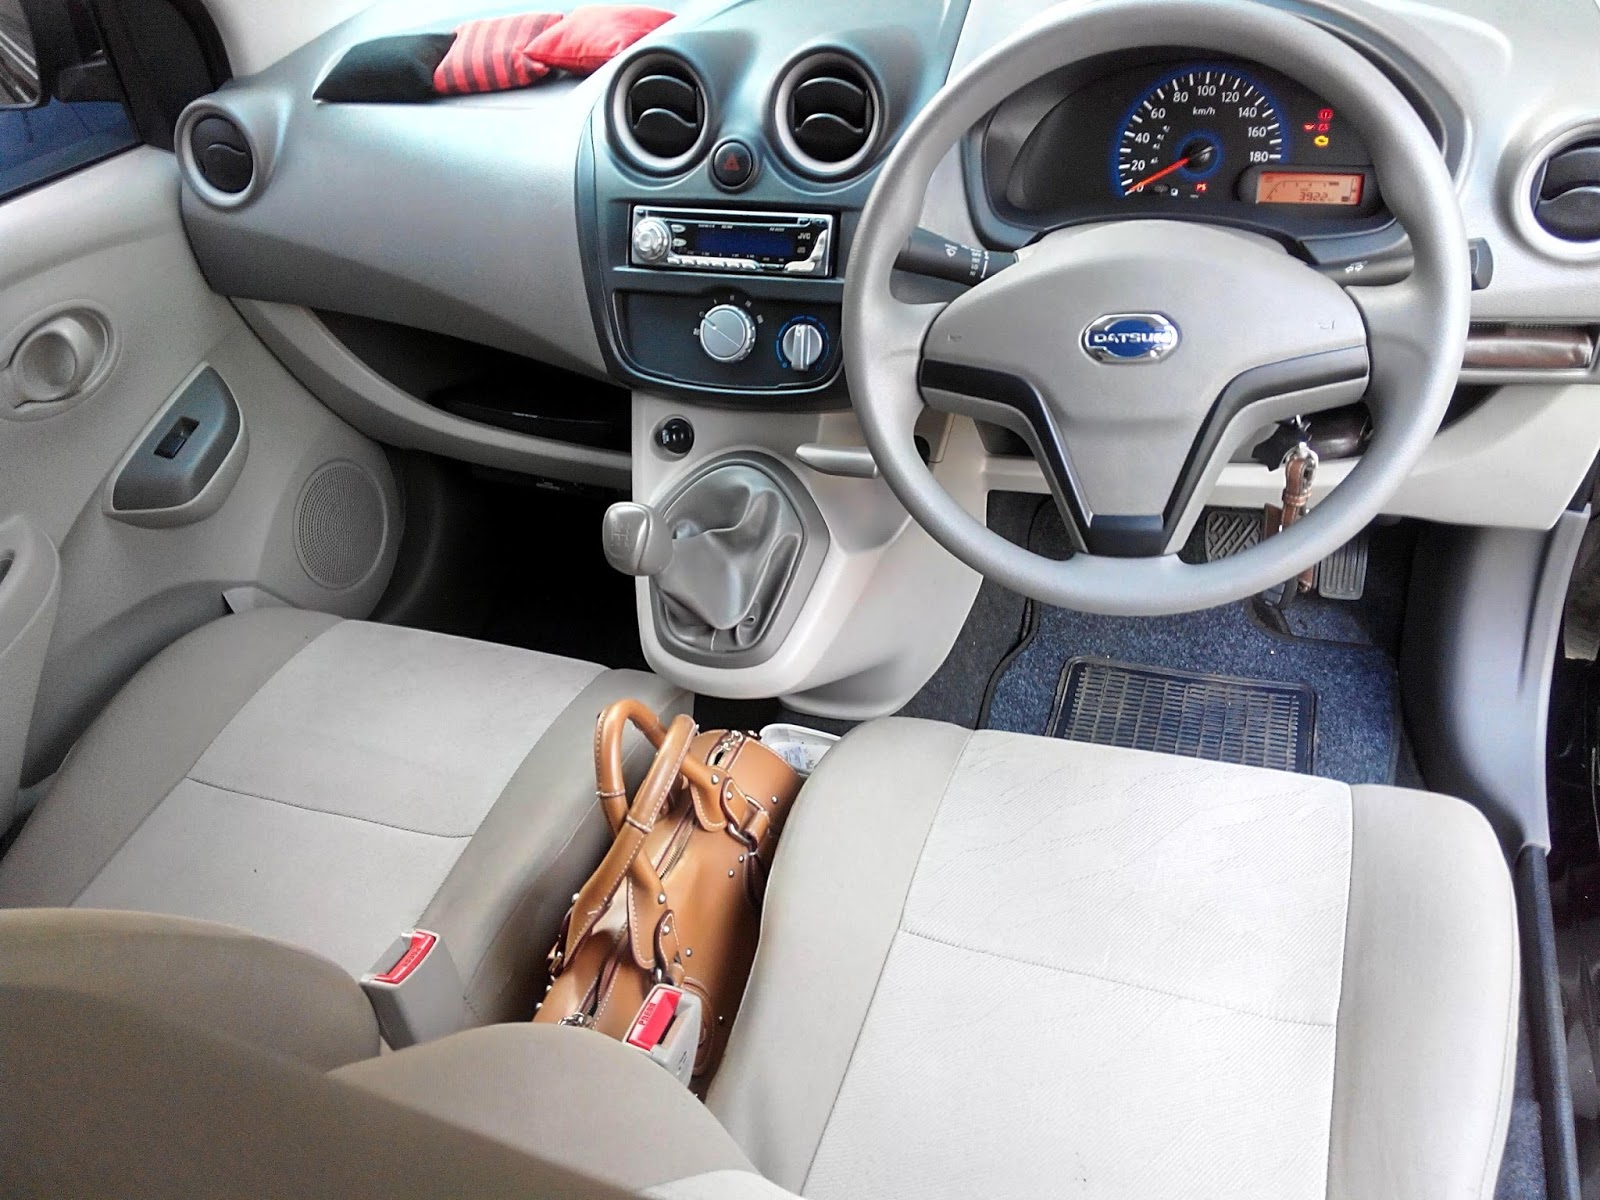 Top Modif Interior Mobil Datsun Duniaotto